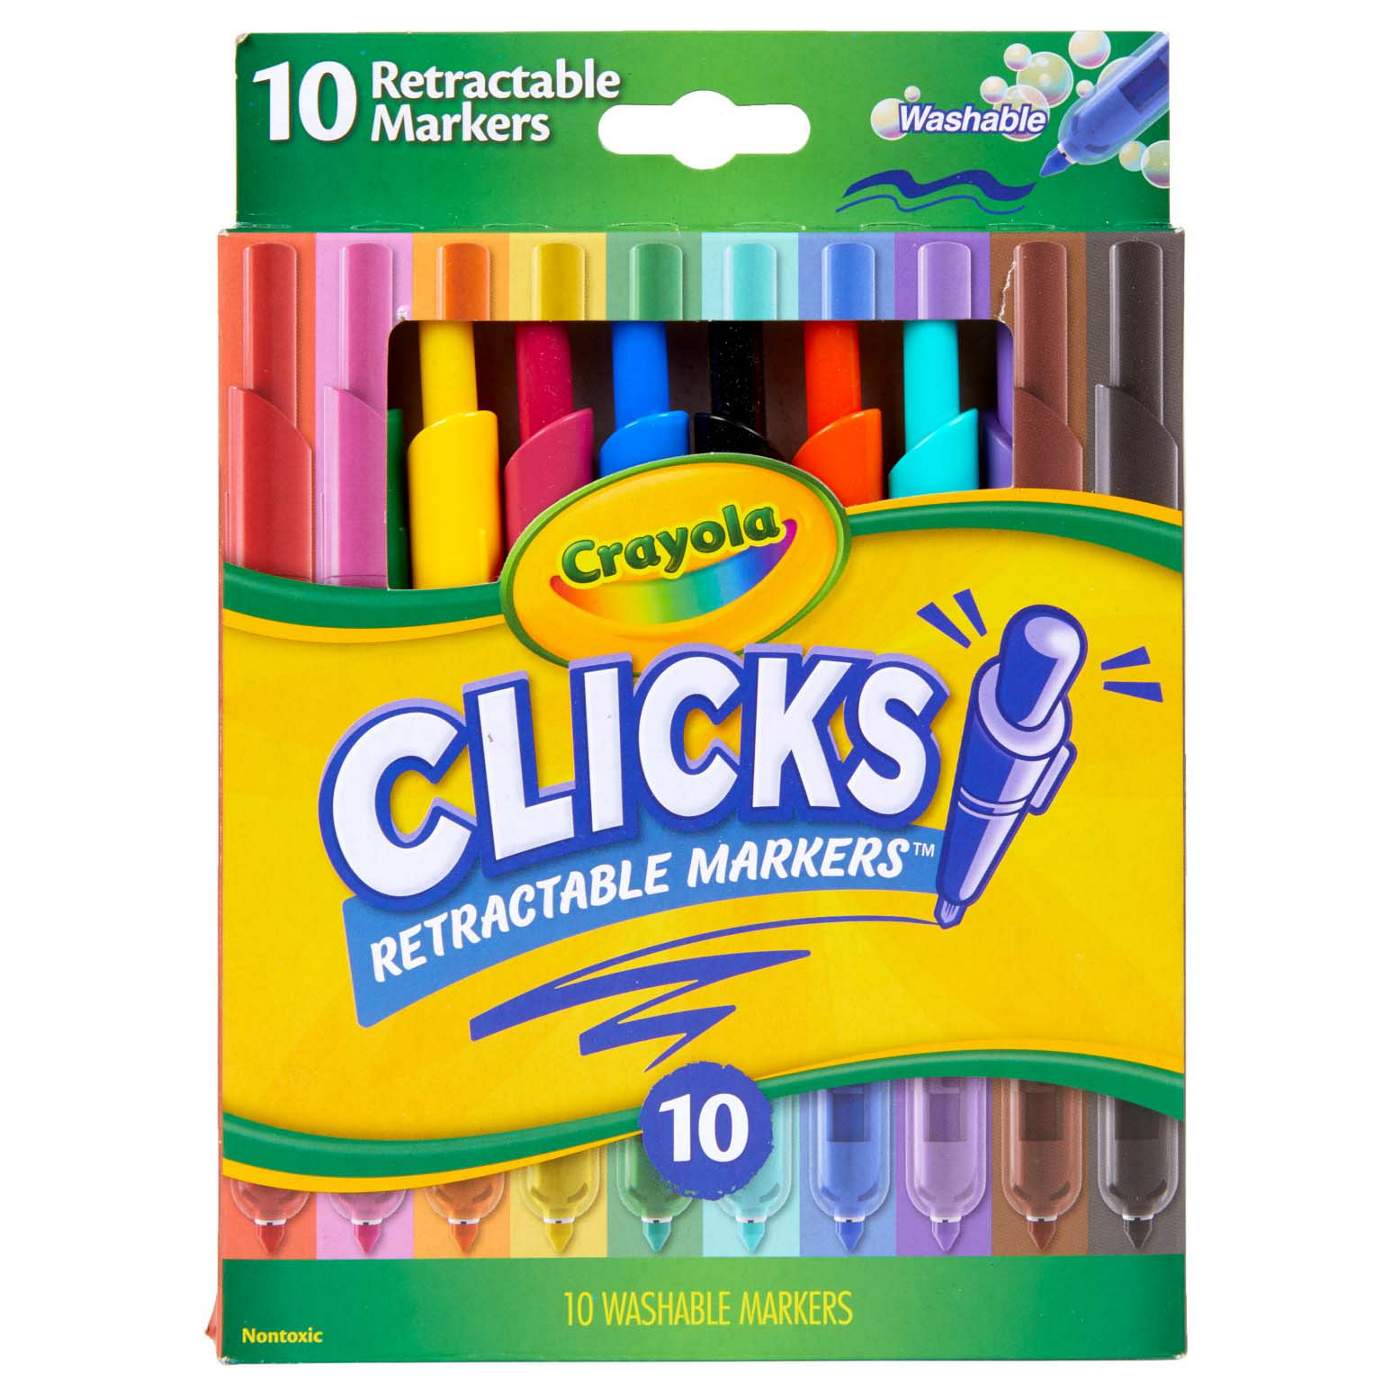 Crayola Clicks Retractable Washable Markers; image 1 of 3